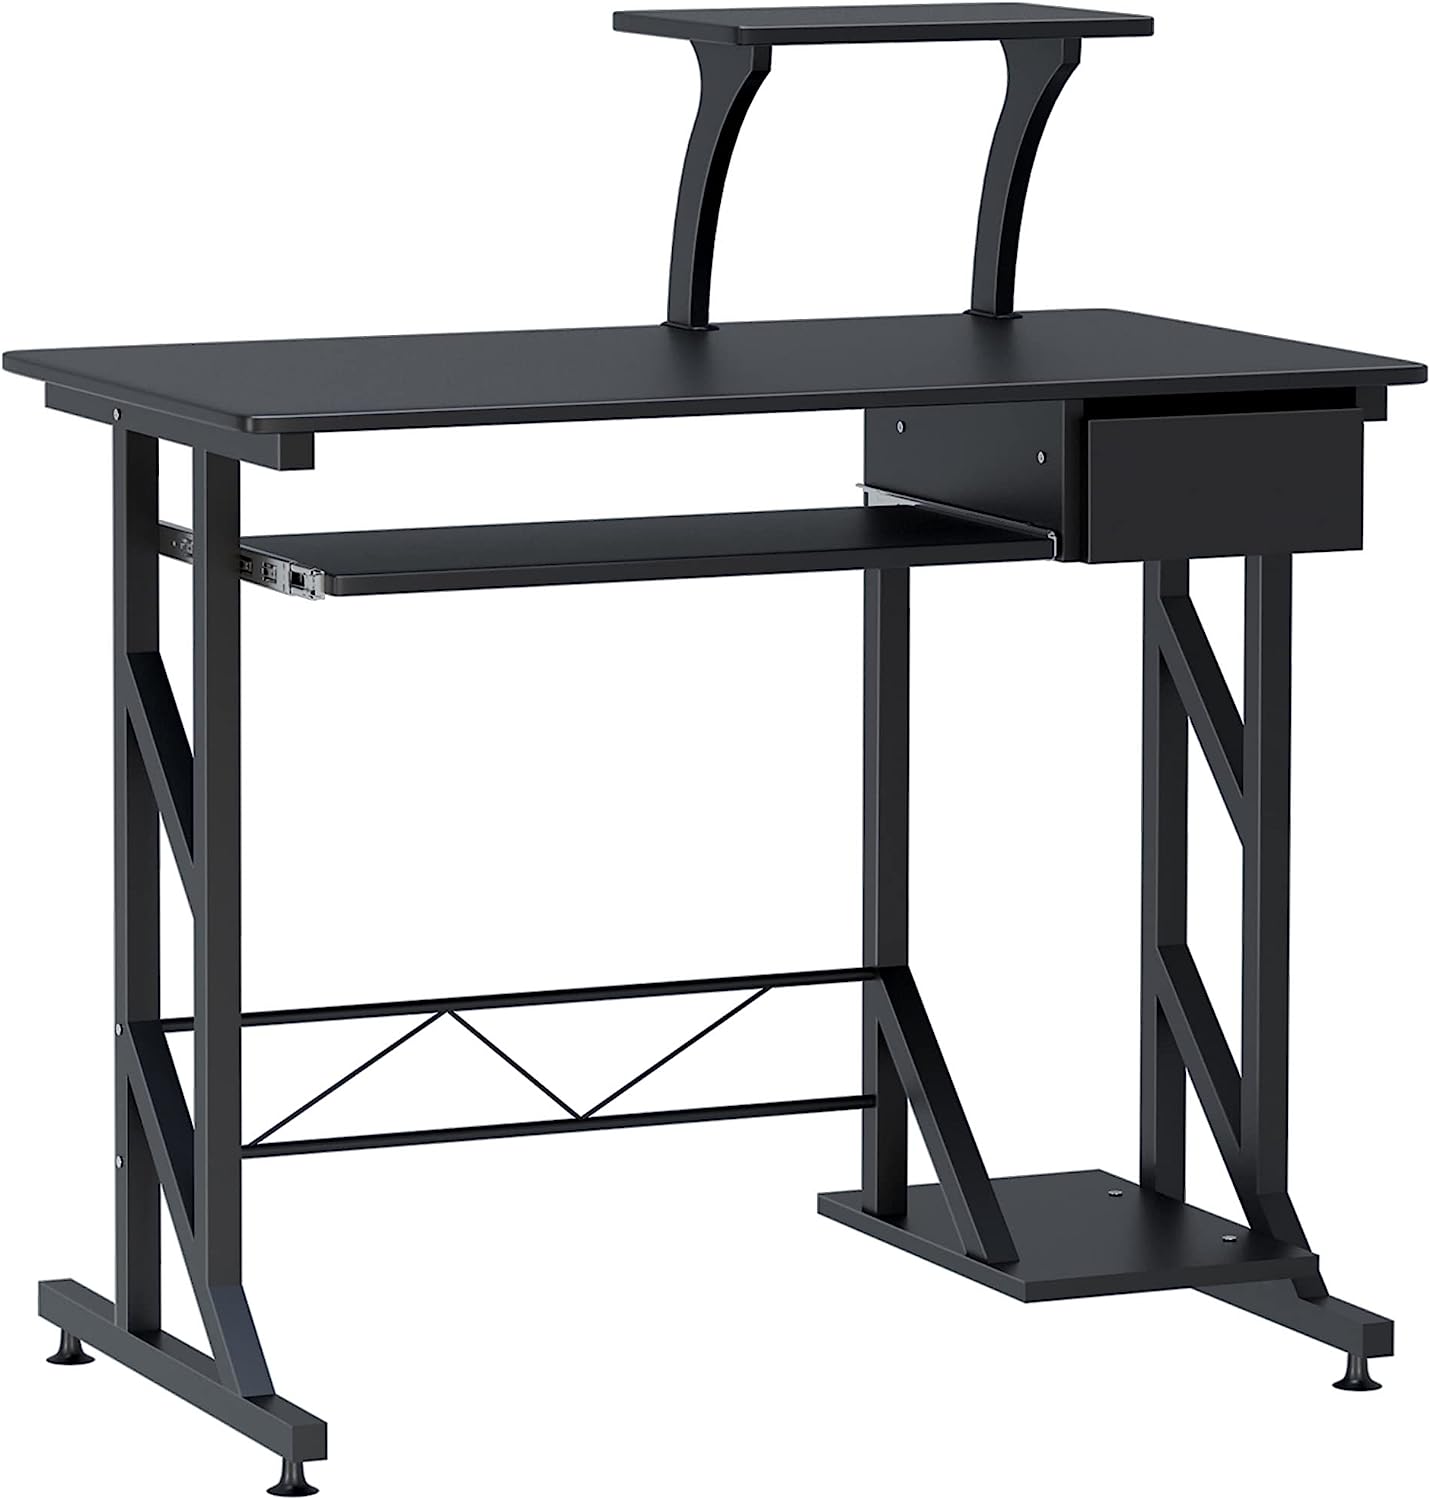 ProperAV Computer Desk with Sliding Keyboard Tray (Black)